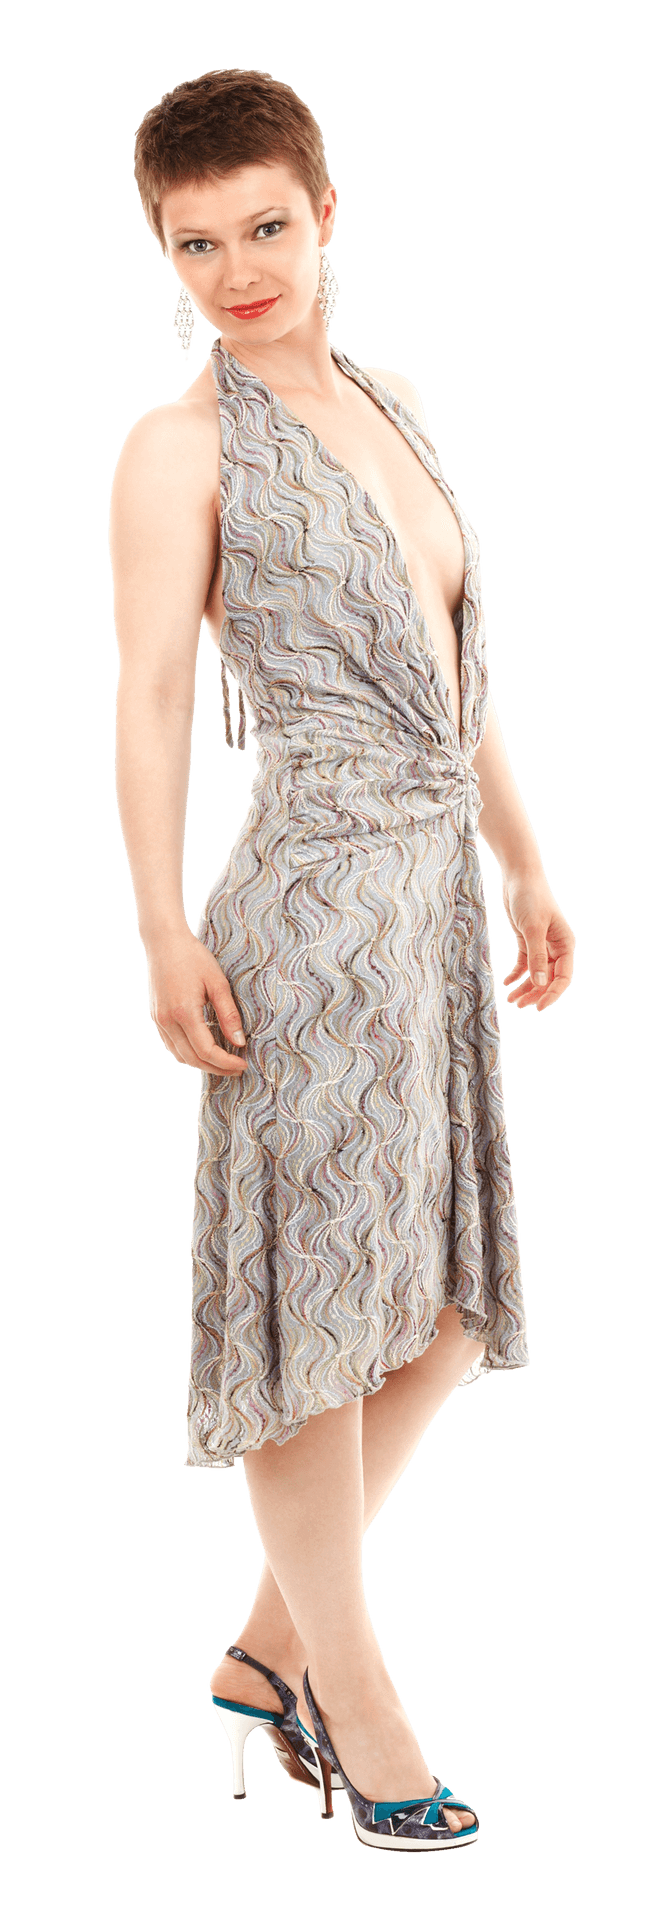 Elegant Womanin Patterned Dress PNG image